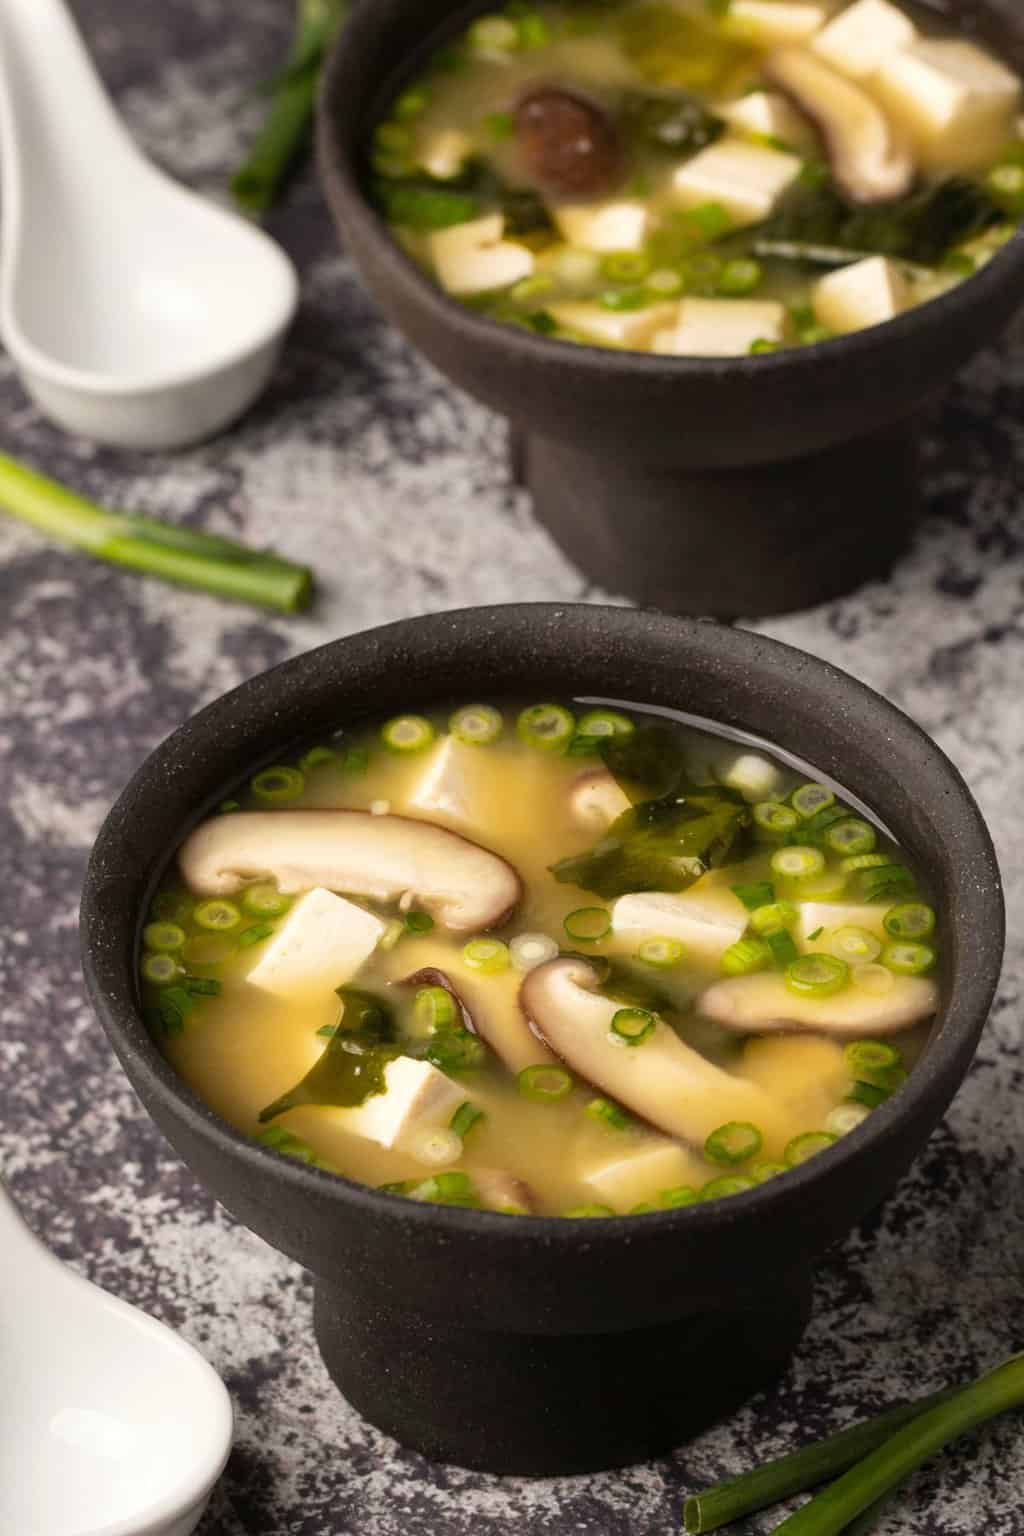 Vegan Miso Soup